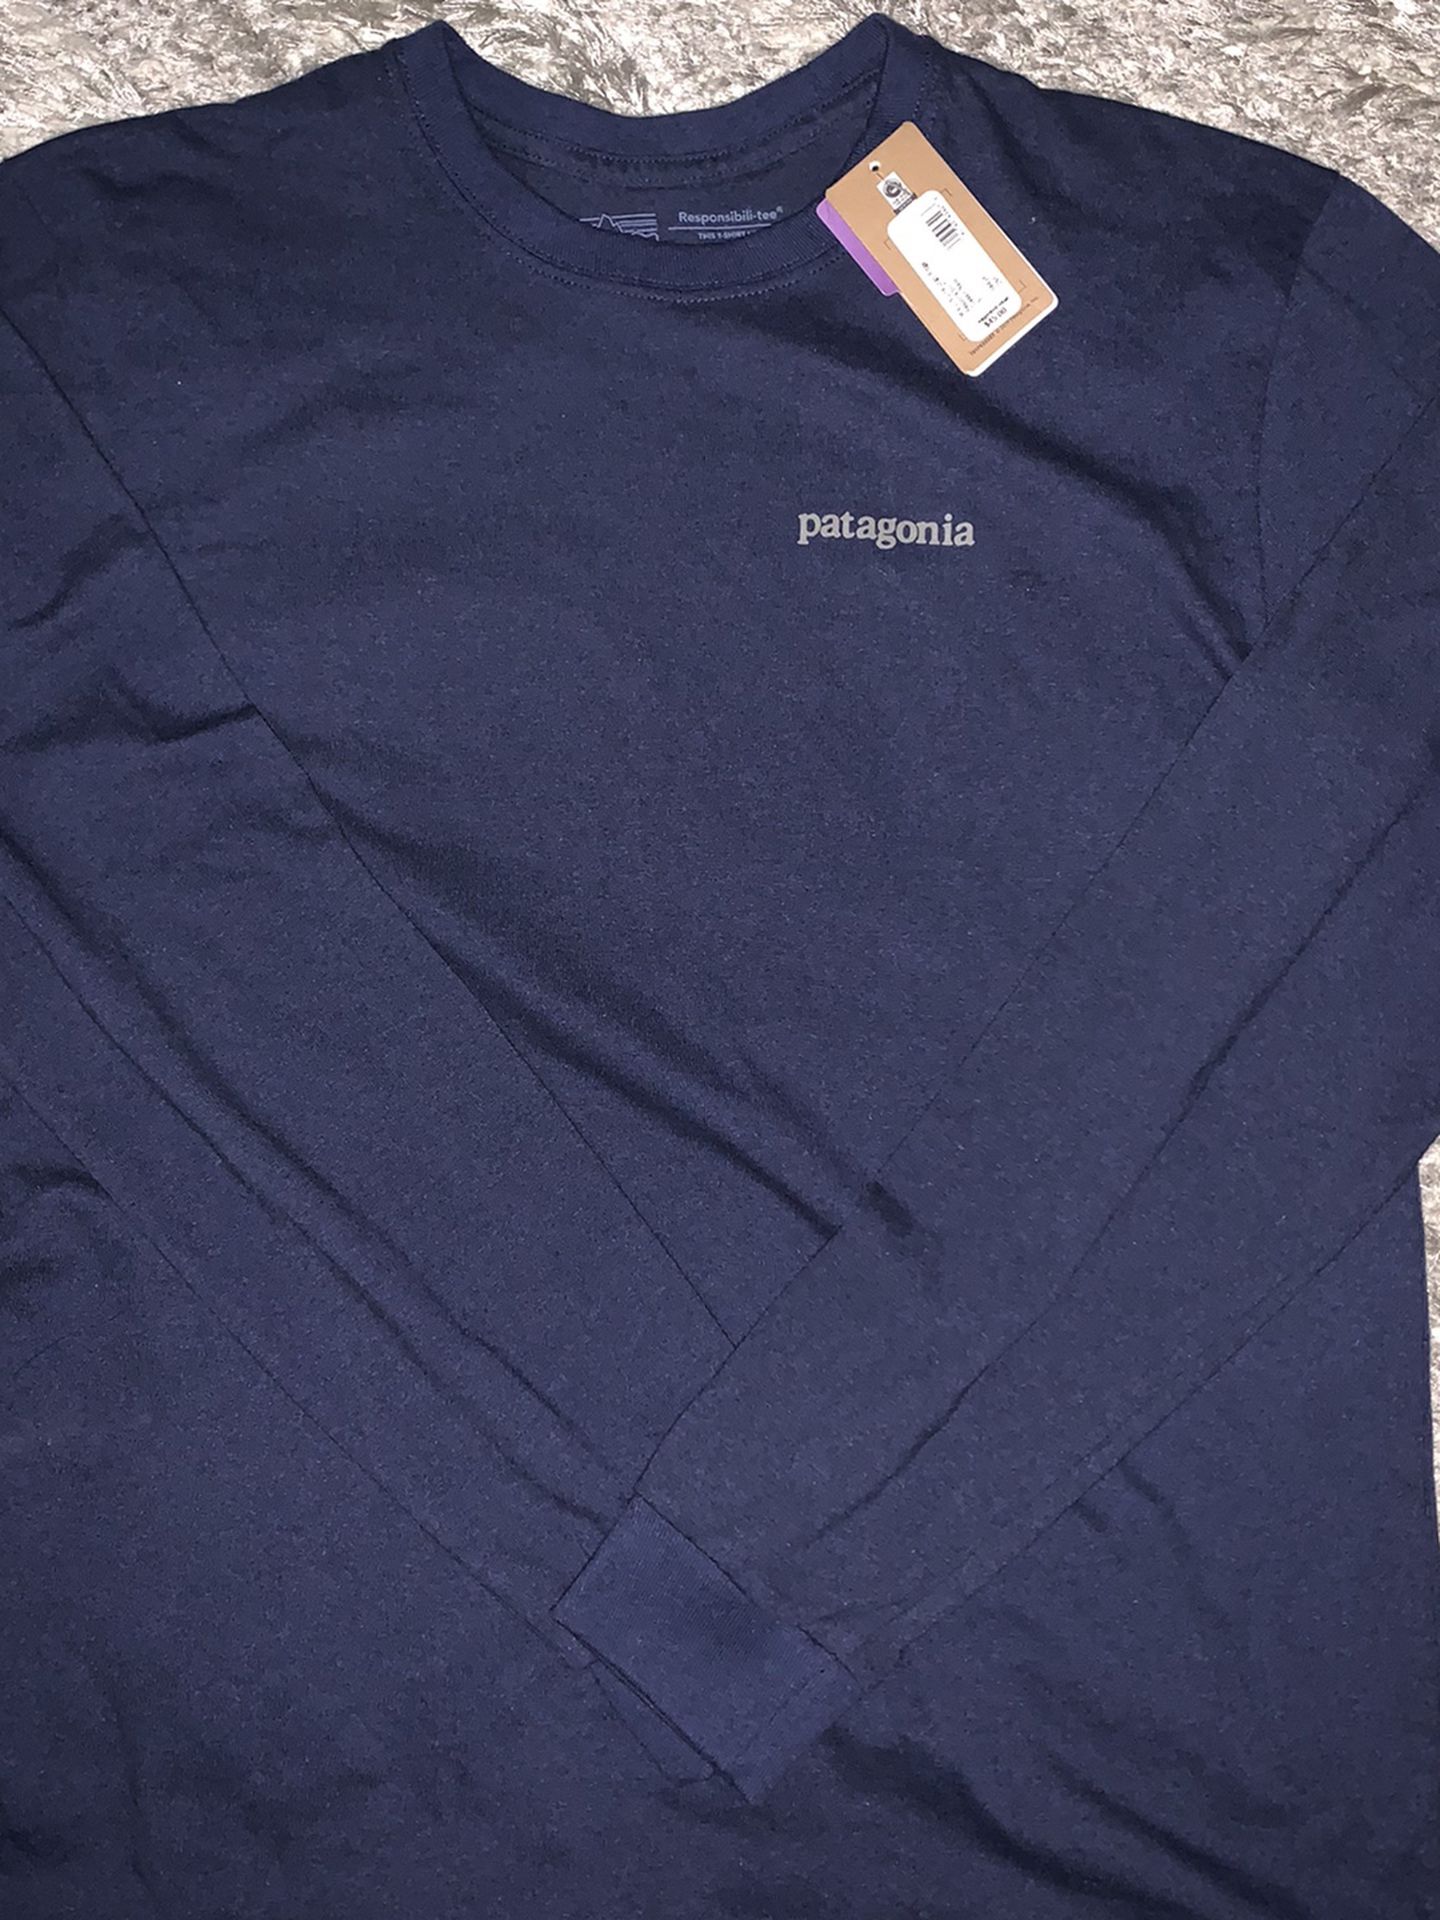 NEW Men’s Small Patagonia Long Sleeve Navy Blue Shirt Top